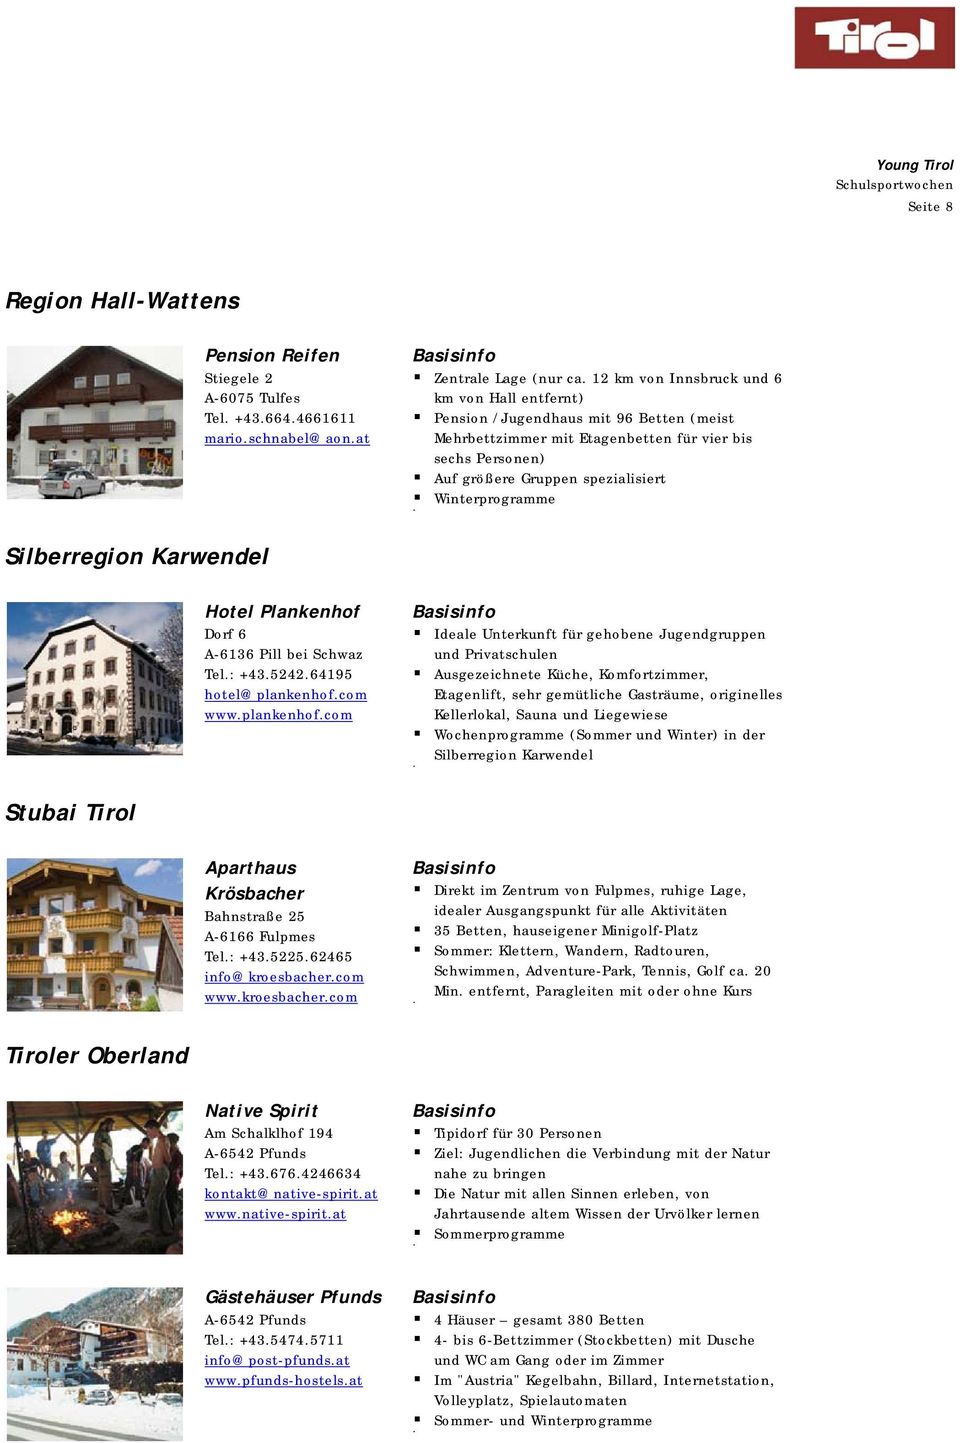 Silberregion Karwendel Hotel Plankenhof Dorf 6 A-6136 Pill bei Schwaz Tel.: +43.5242.64195 hotel@plankenhof.